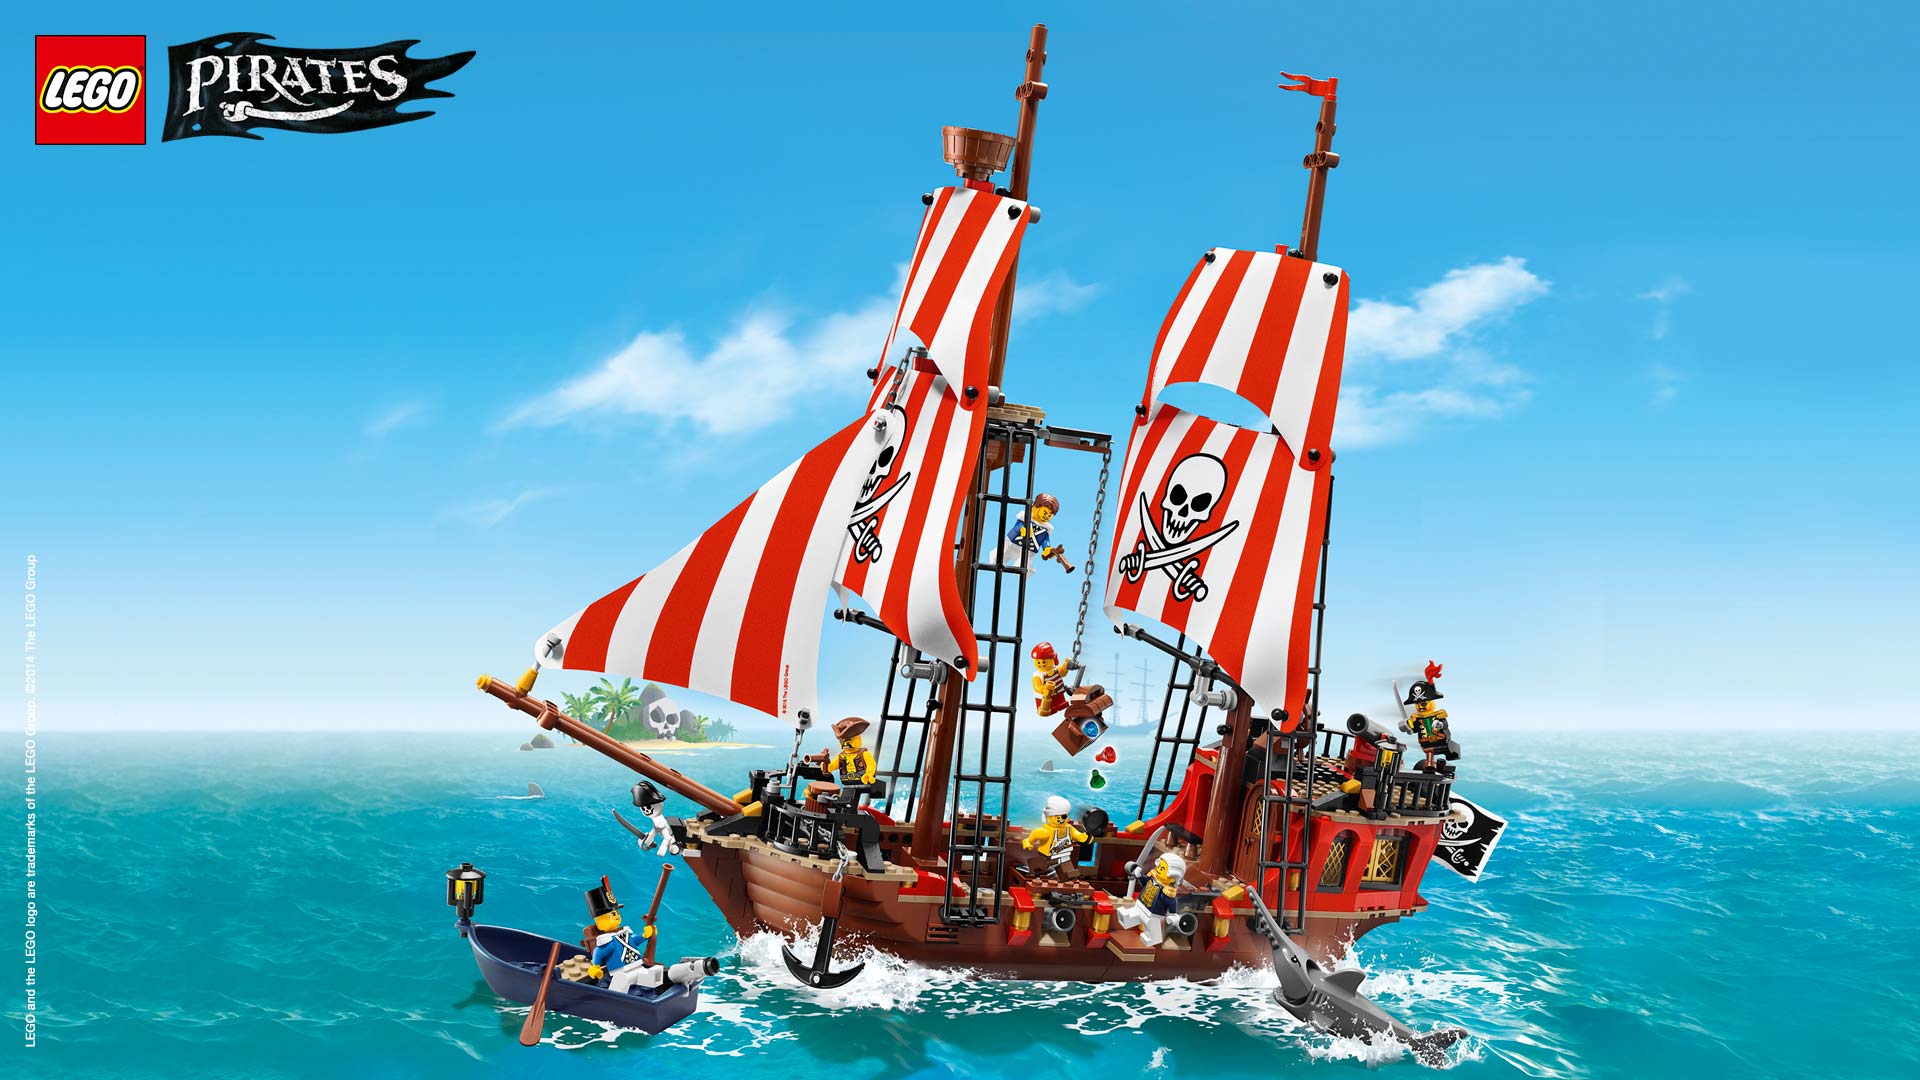 Pirate Ship Wallpaper Activities Lego Pirates